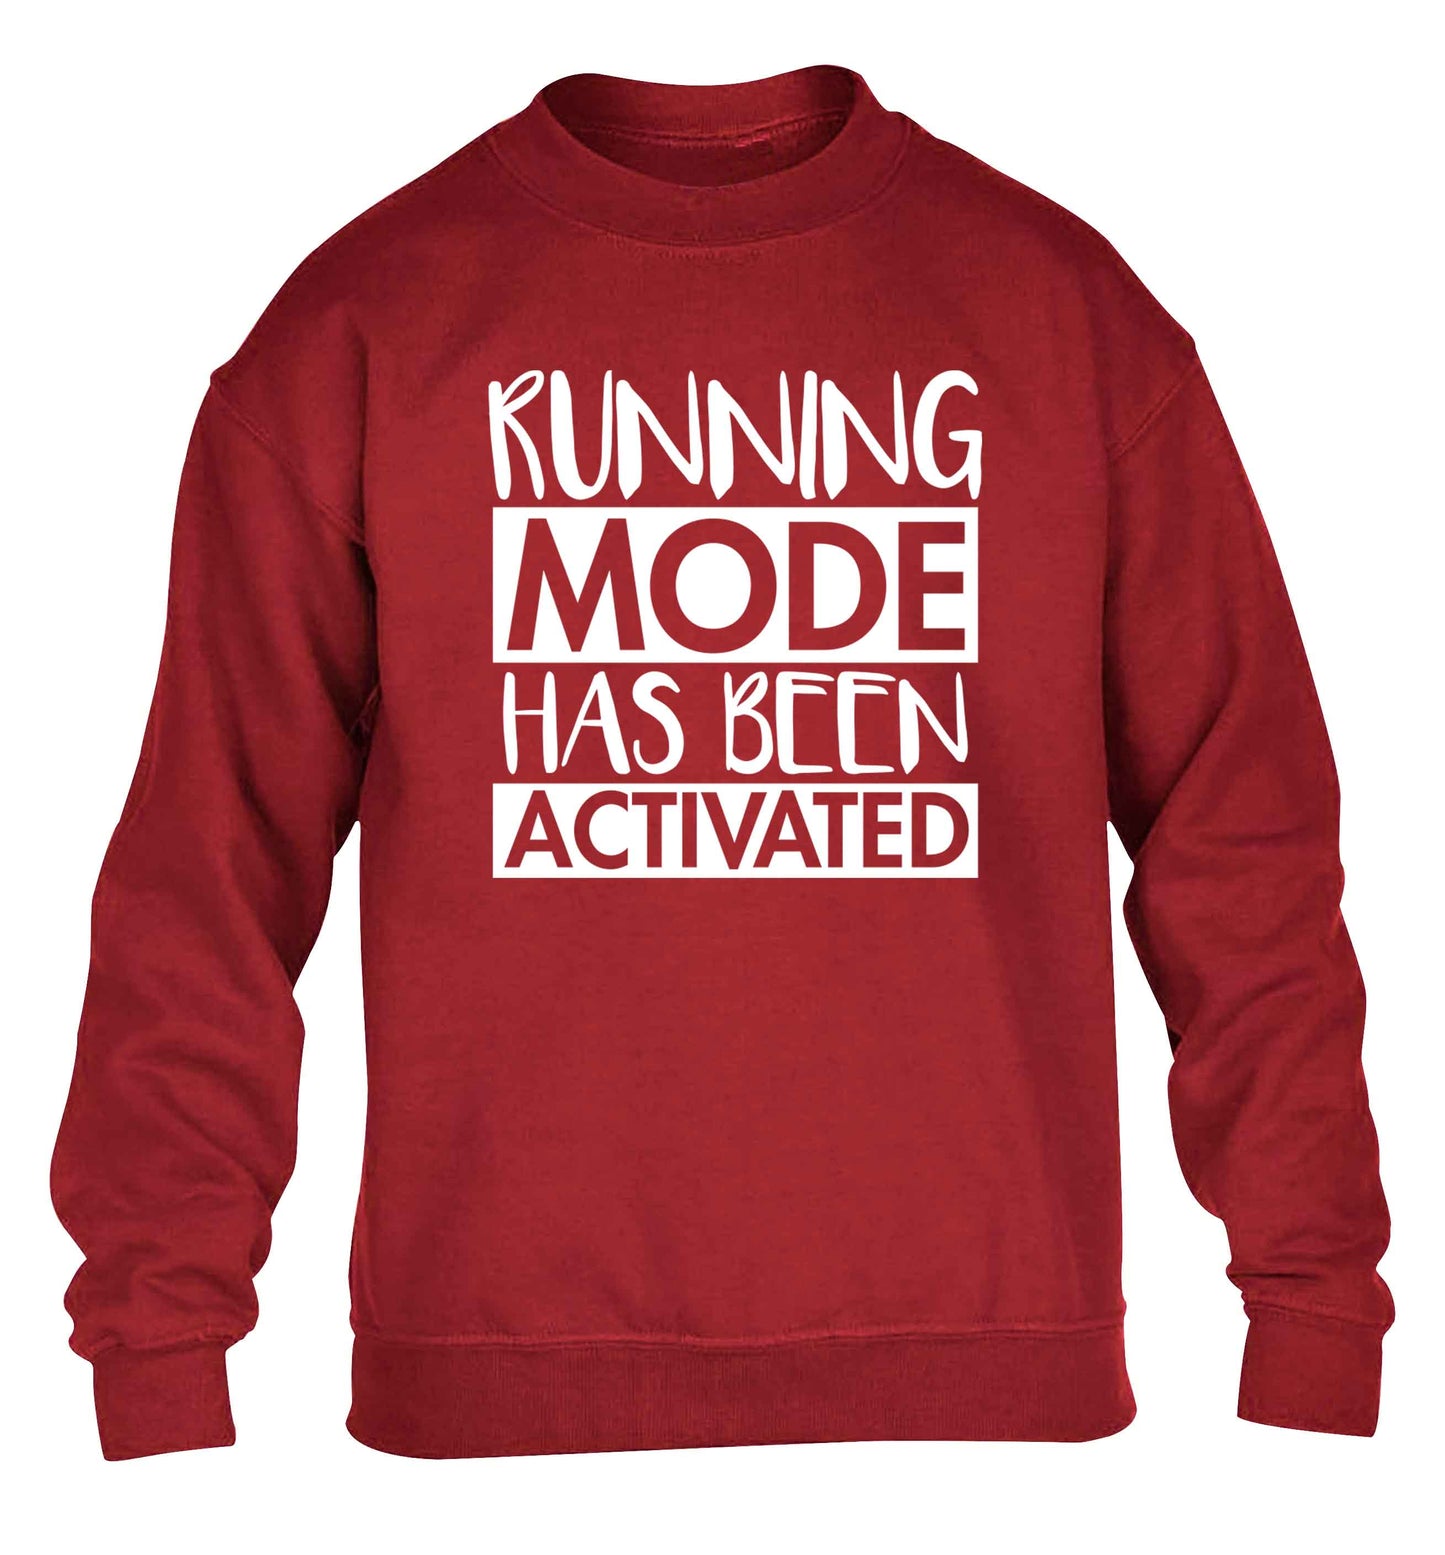 Running mode has been activated children's grey sweater 12-13 Years